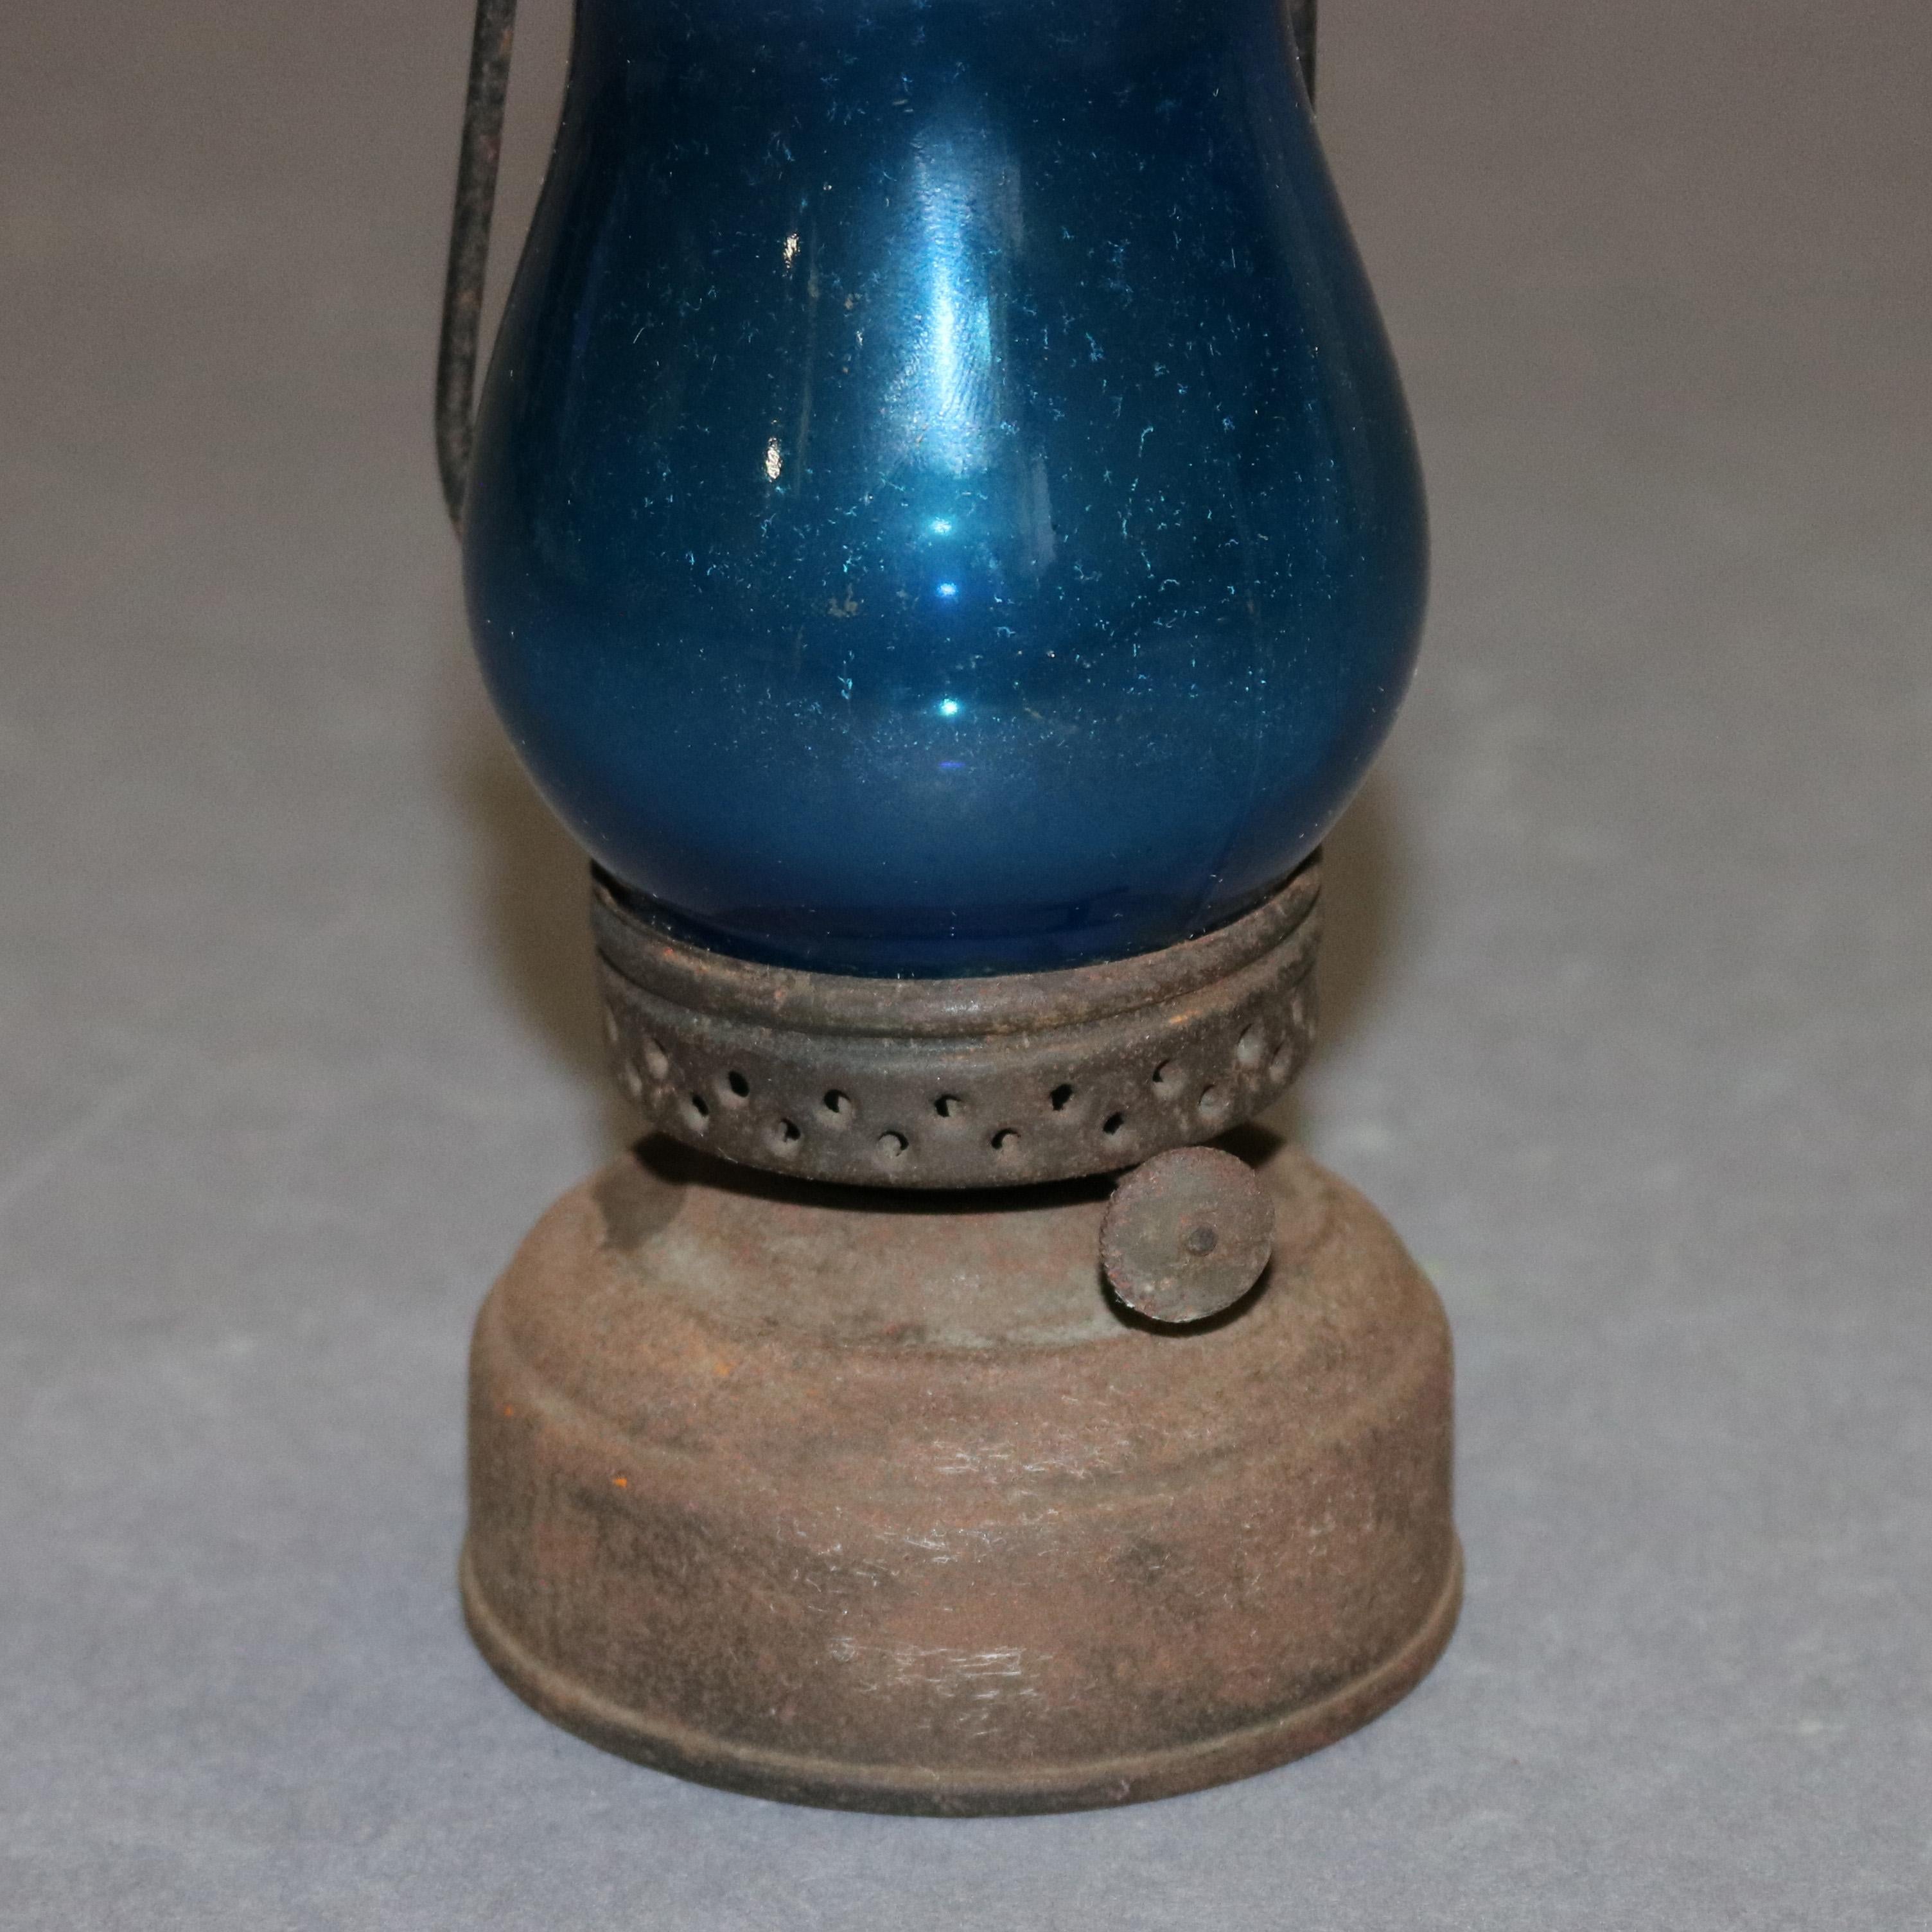 Antique kerosene skater's lamp features petite form with original blue globe, circa 1870

Measures: 7.25